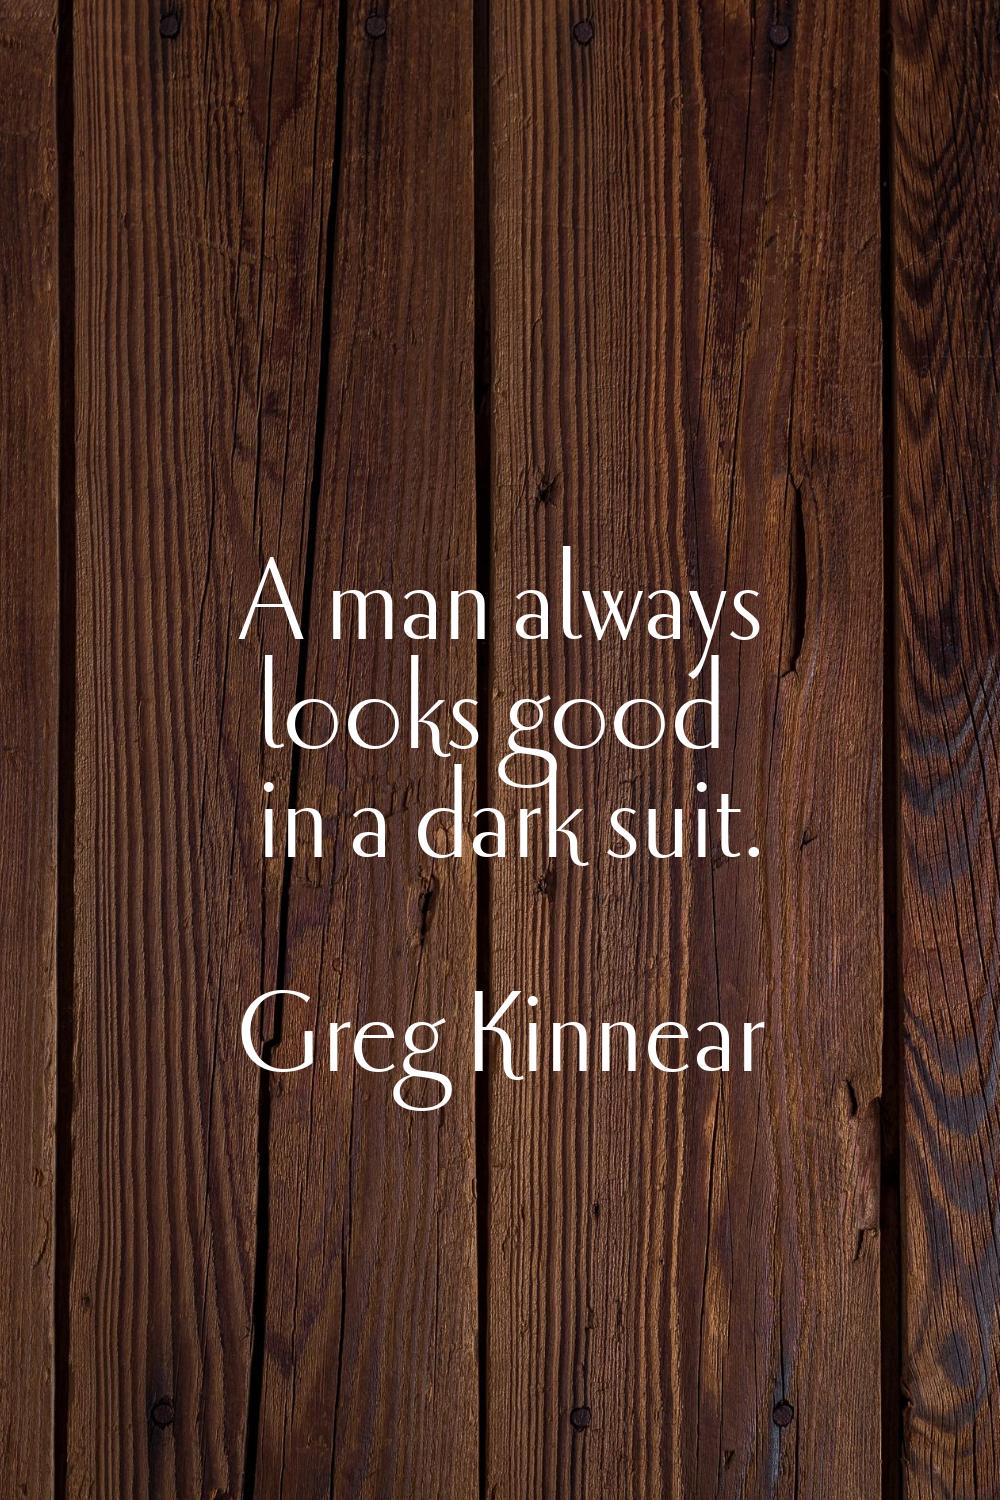 A man always looks good in a dark suit.